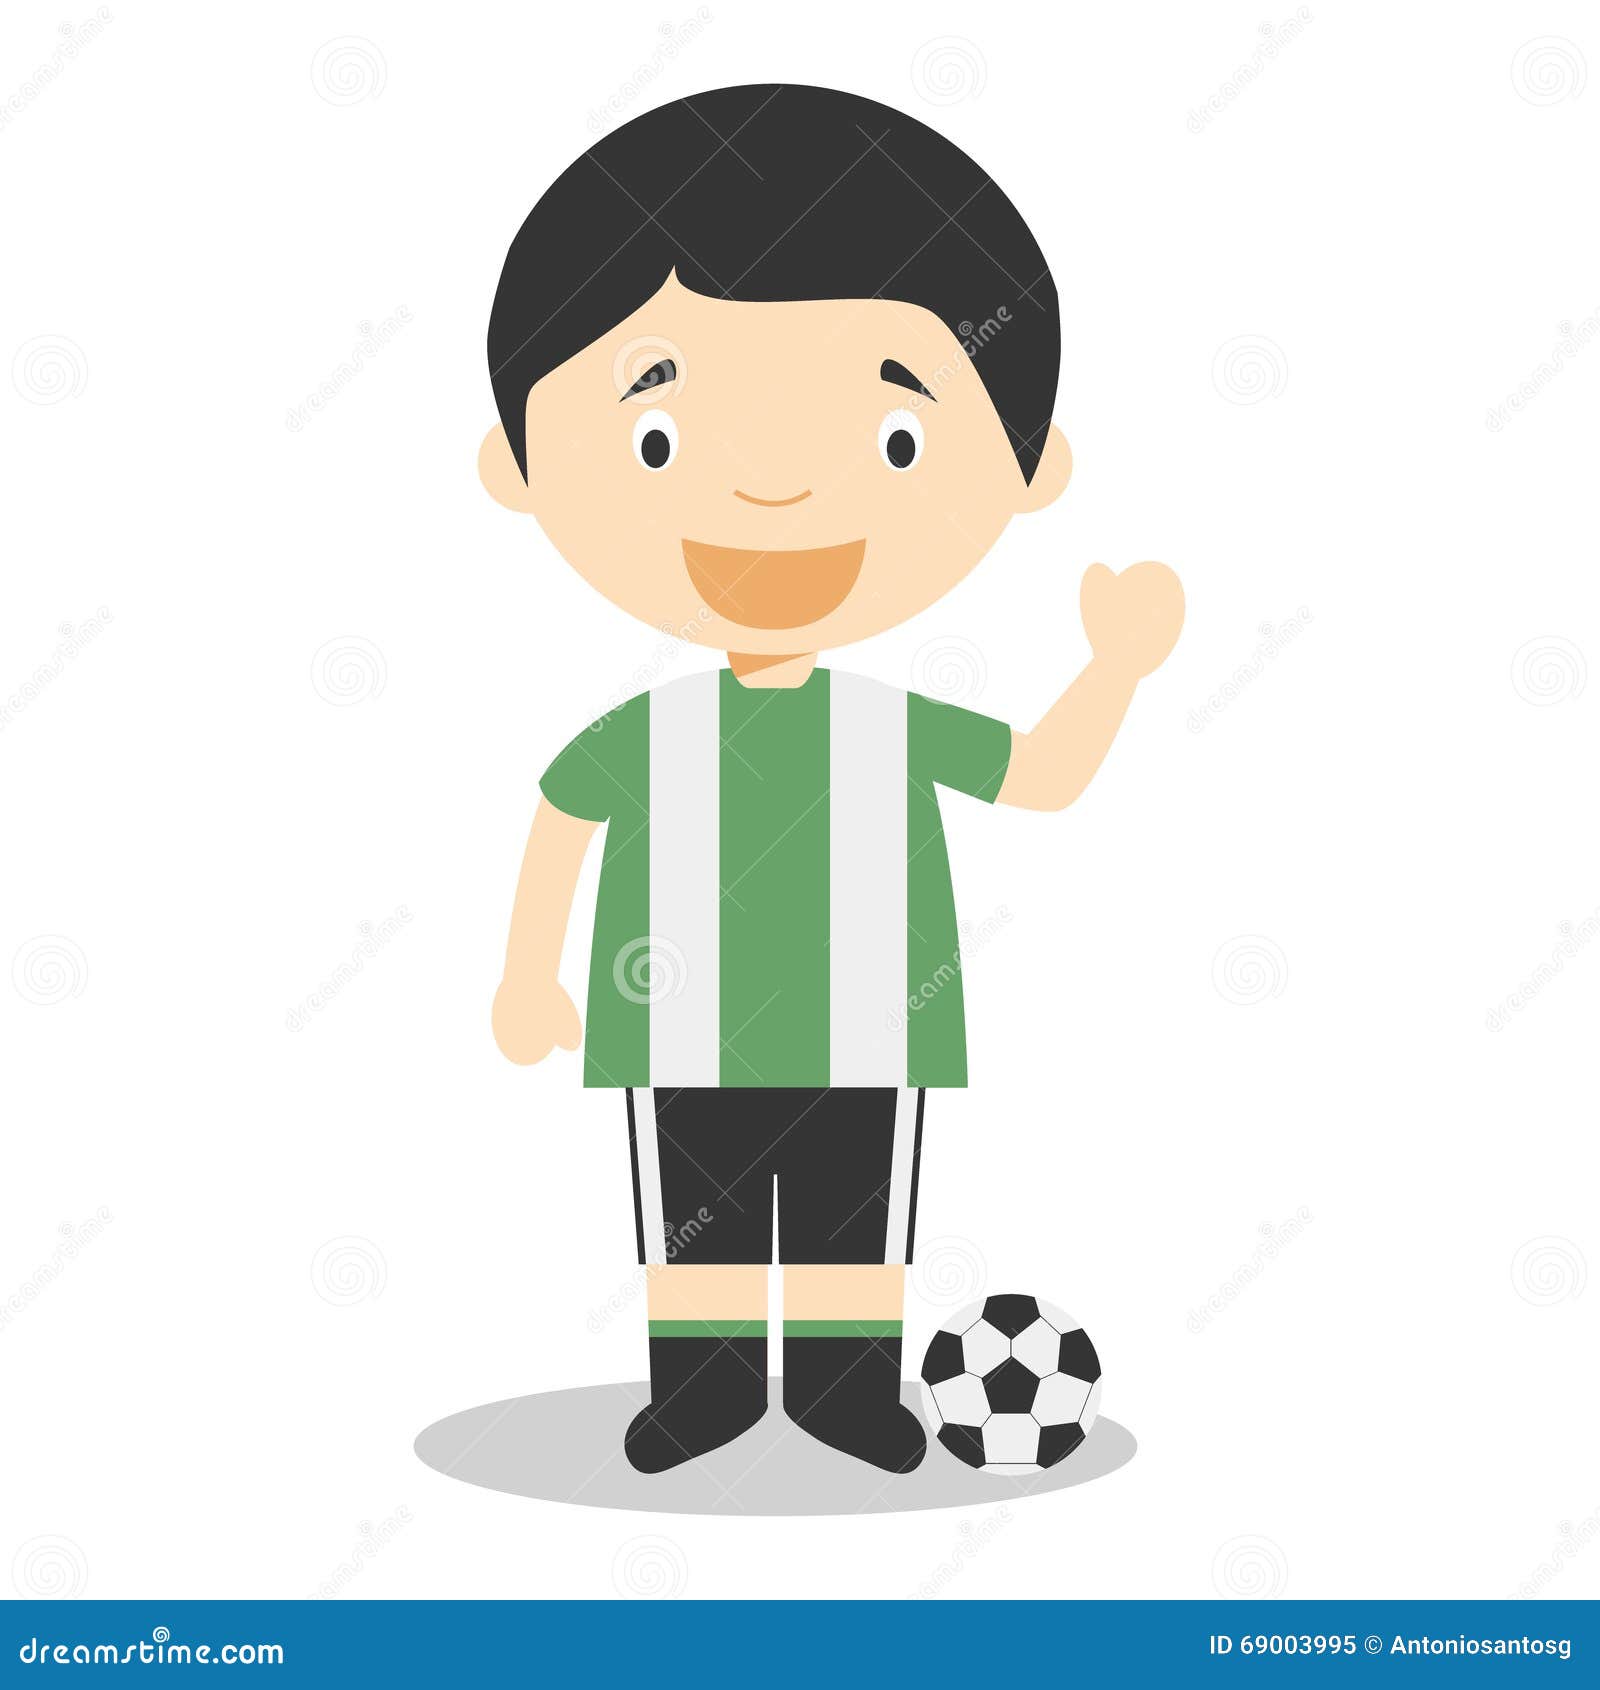 Cute Cartoon Vector Illustration of a Football Player Stock Vector ...